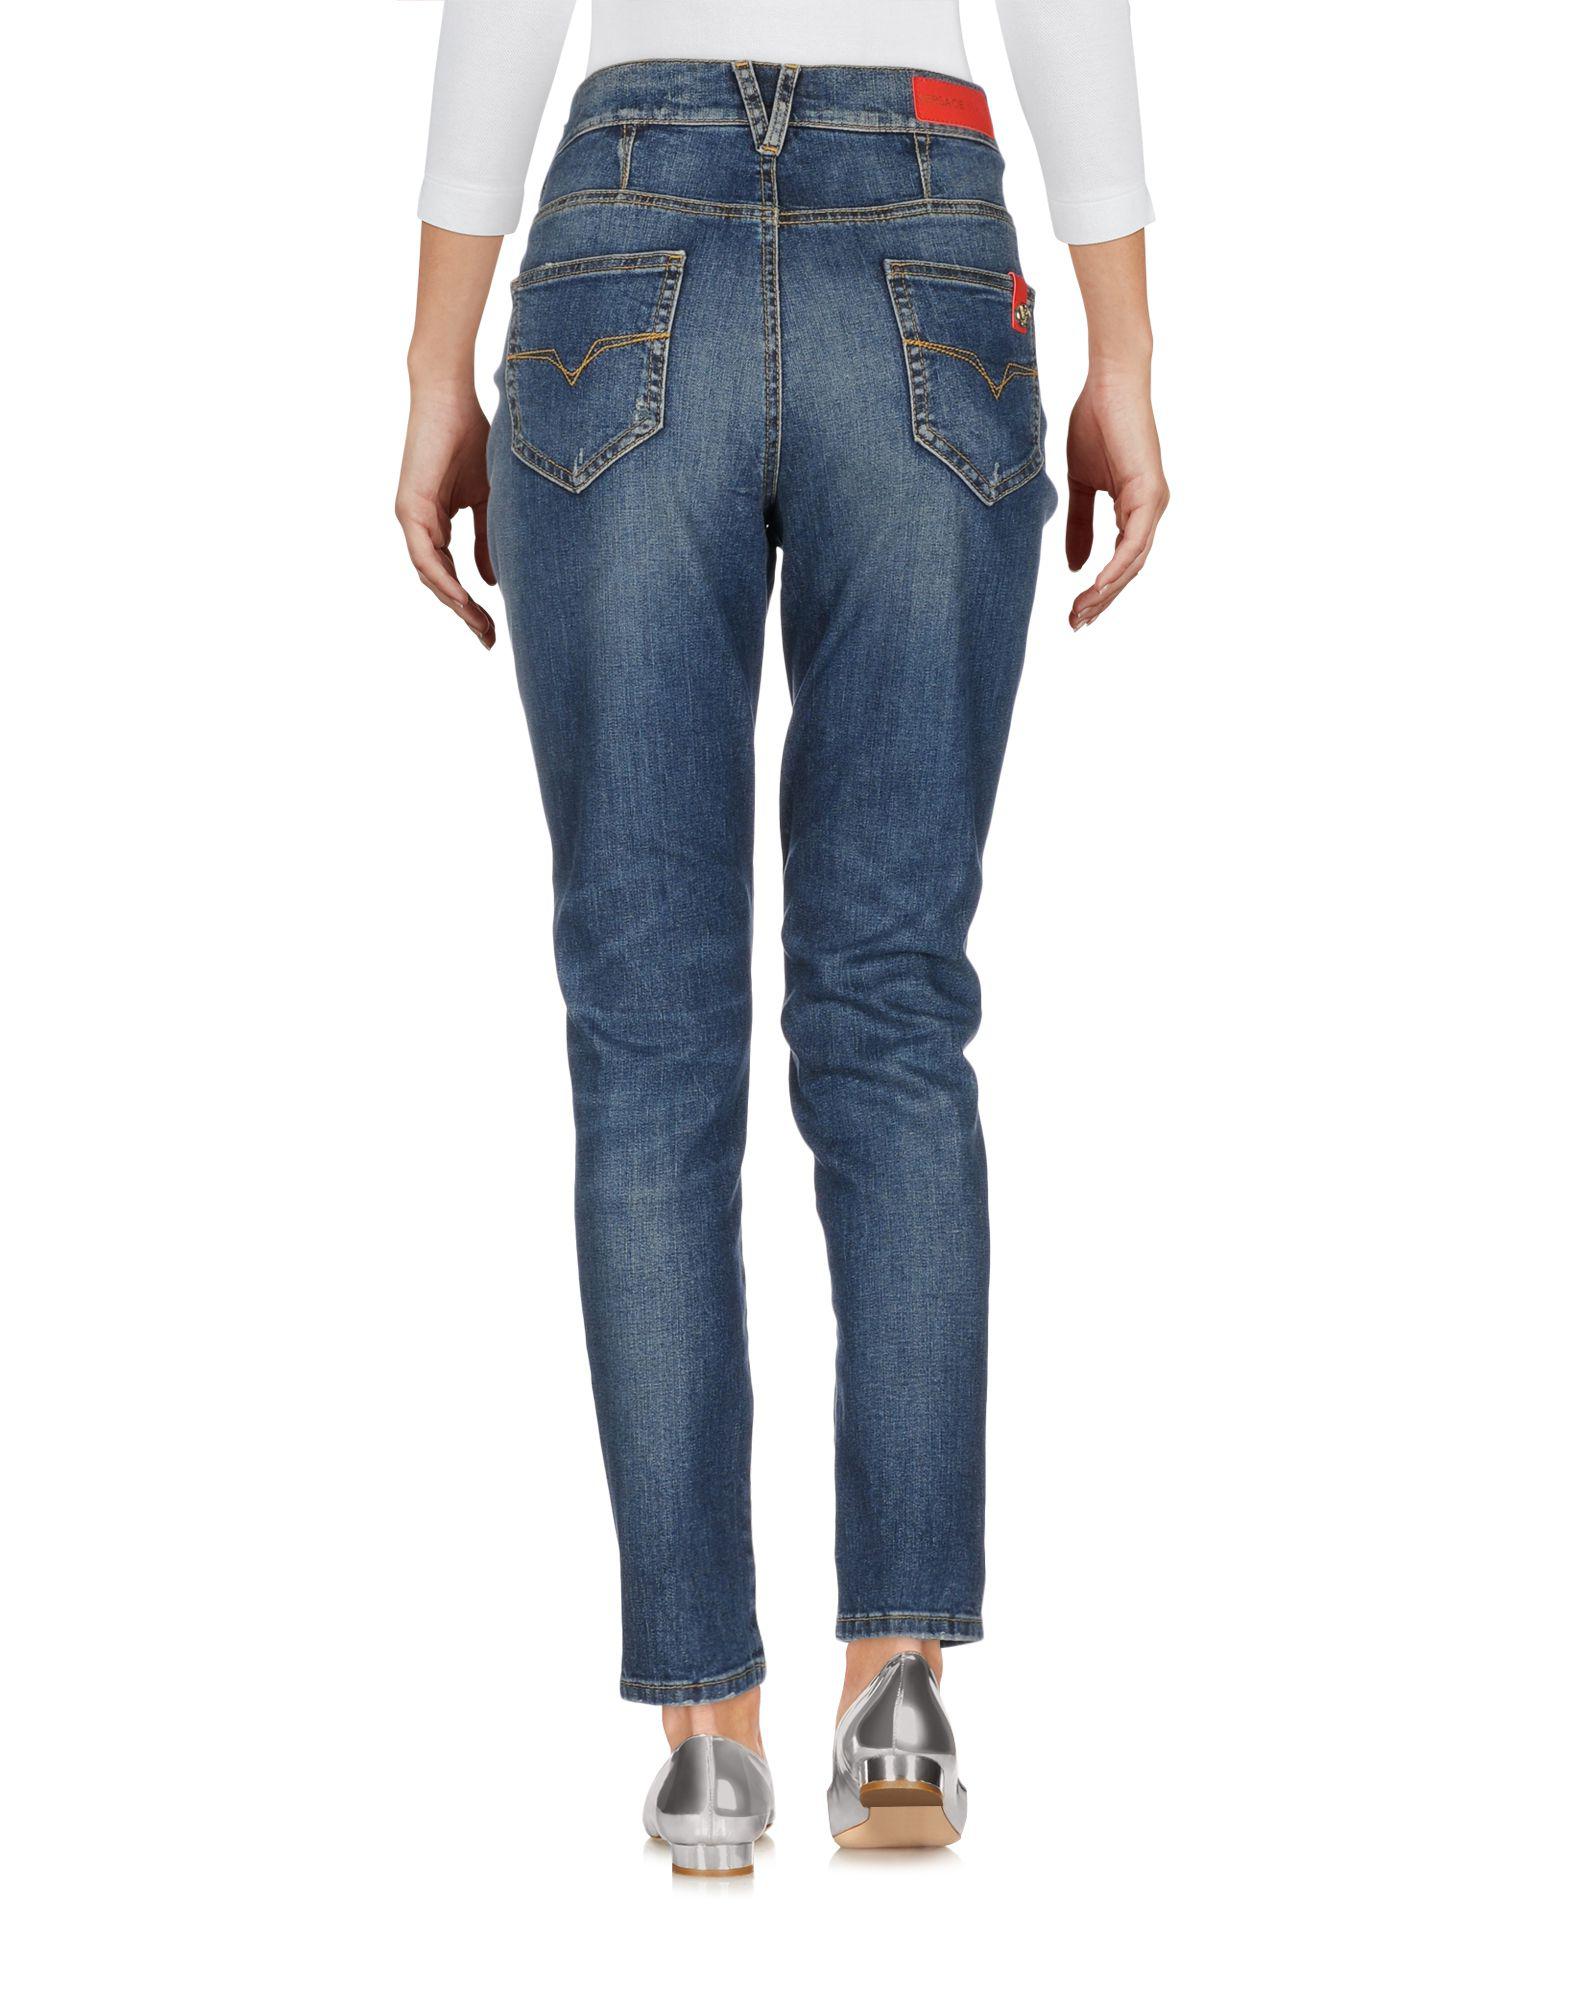 Lyst - Versace Jeans Denim Pants in Blue